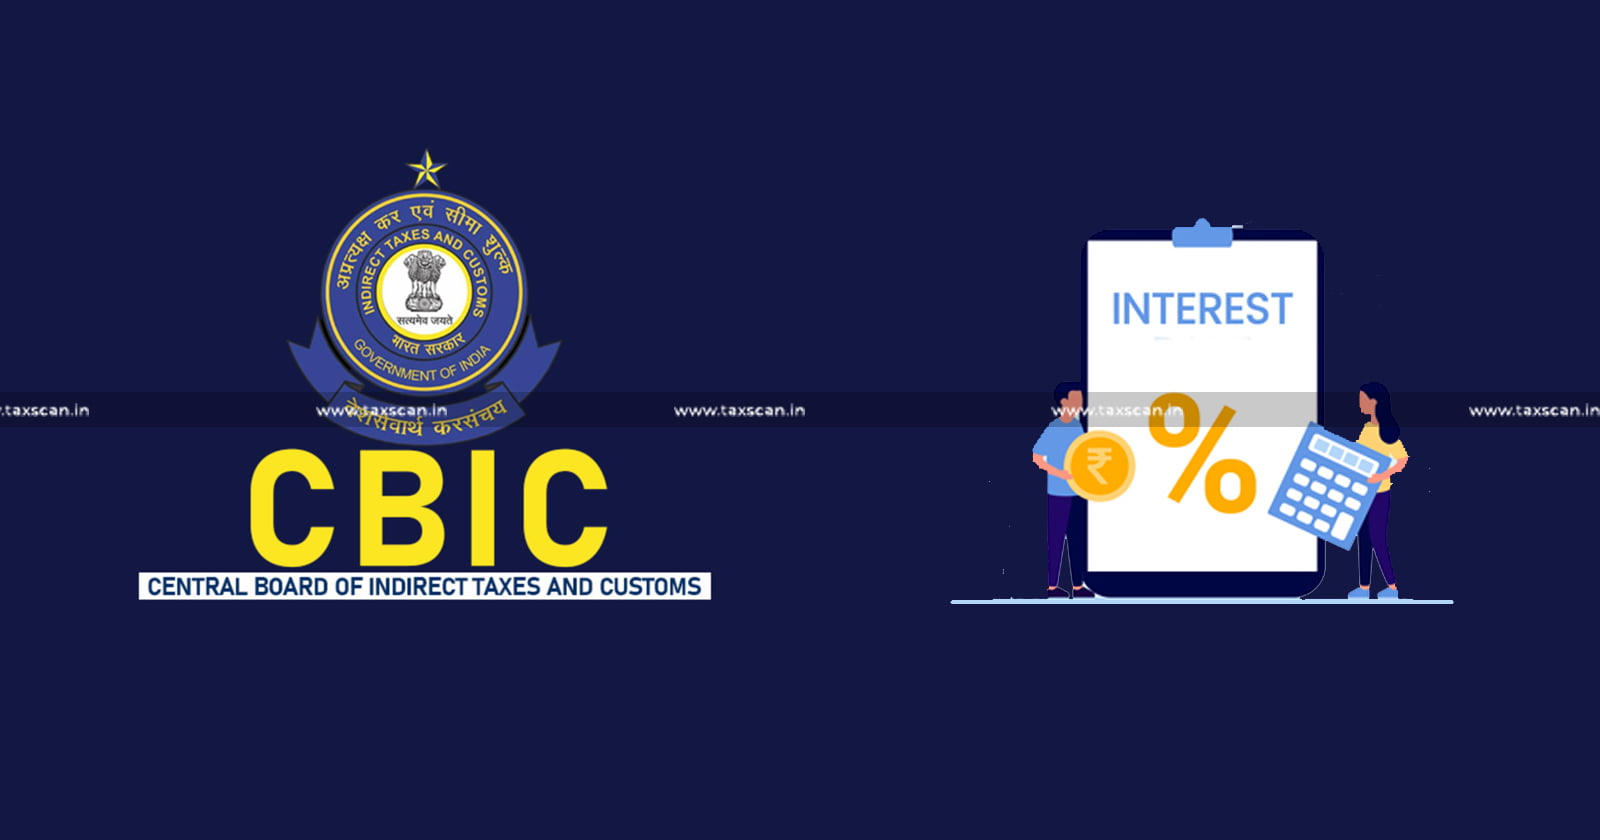 Pay Interest - Interest - ITC - Clarifies CBIC - taxscan